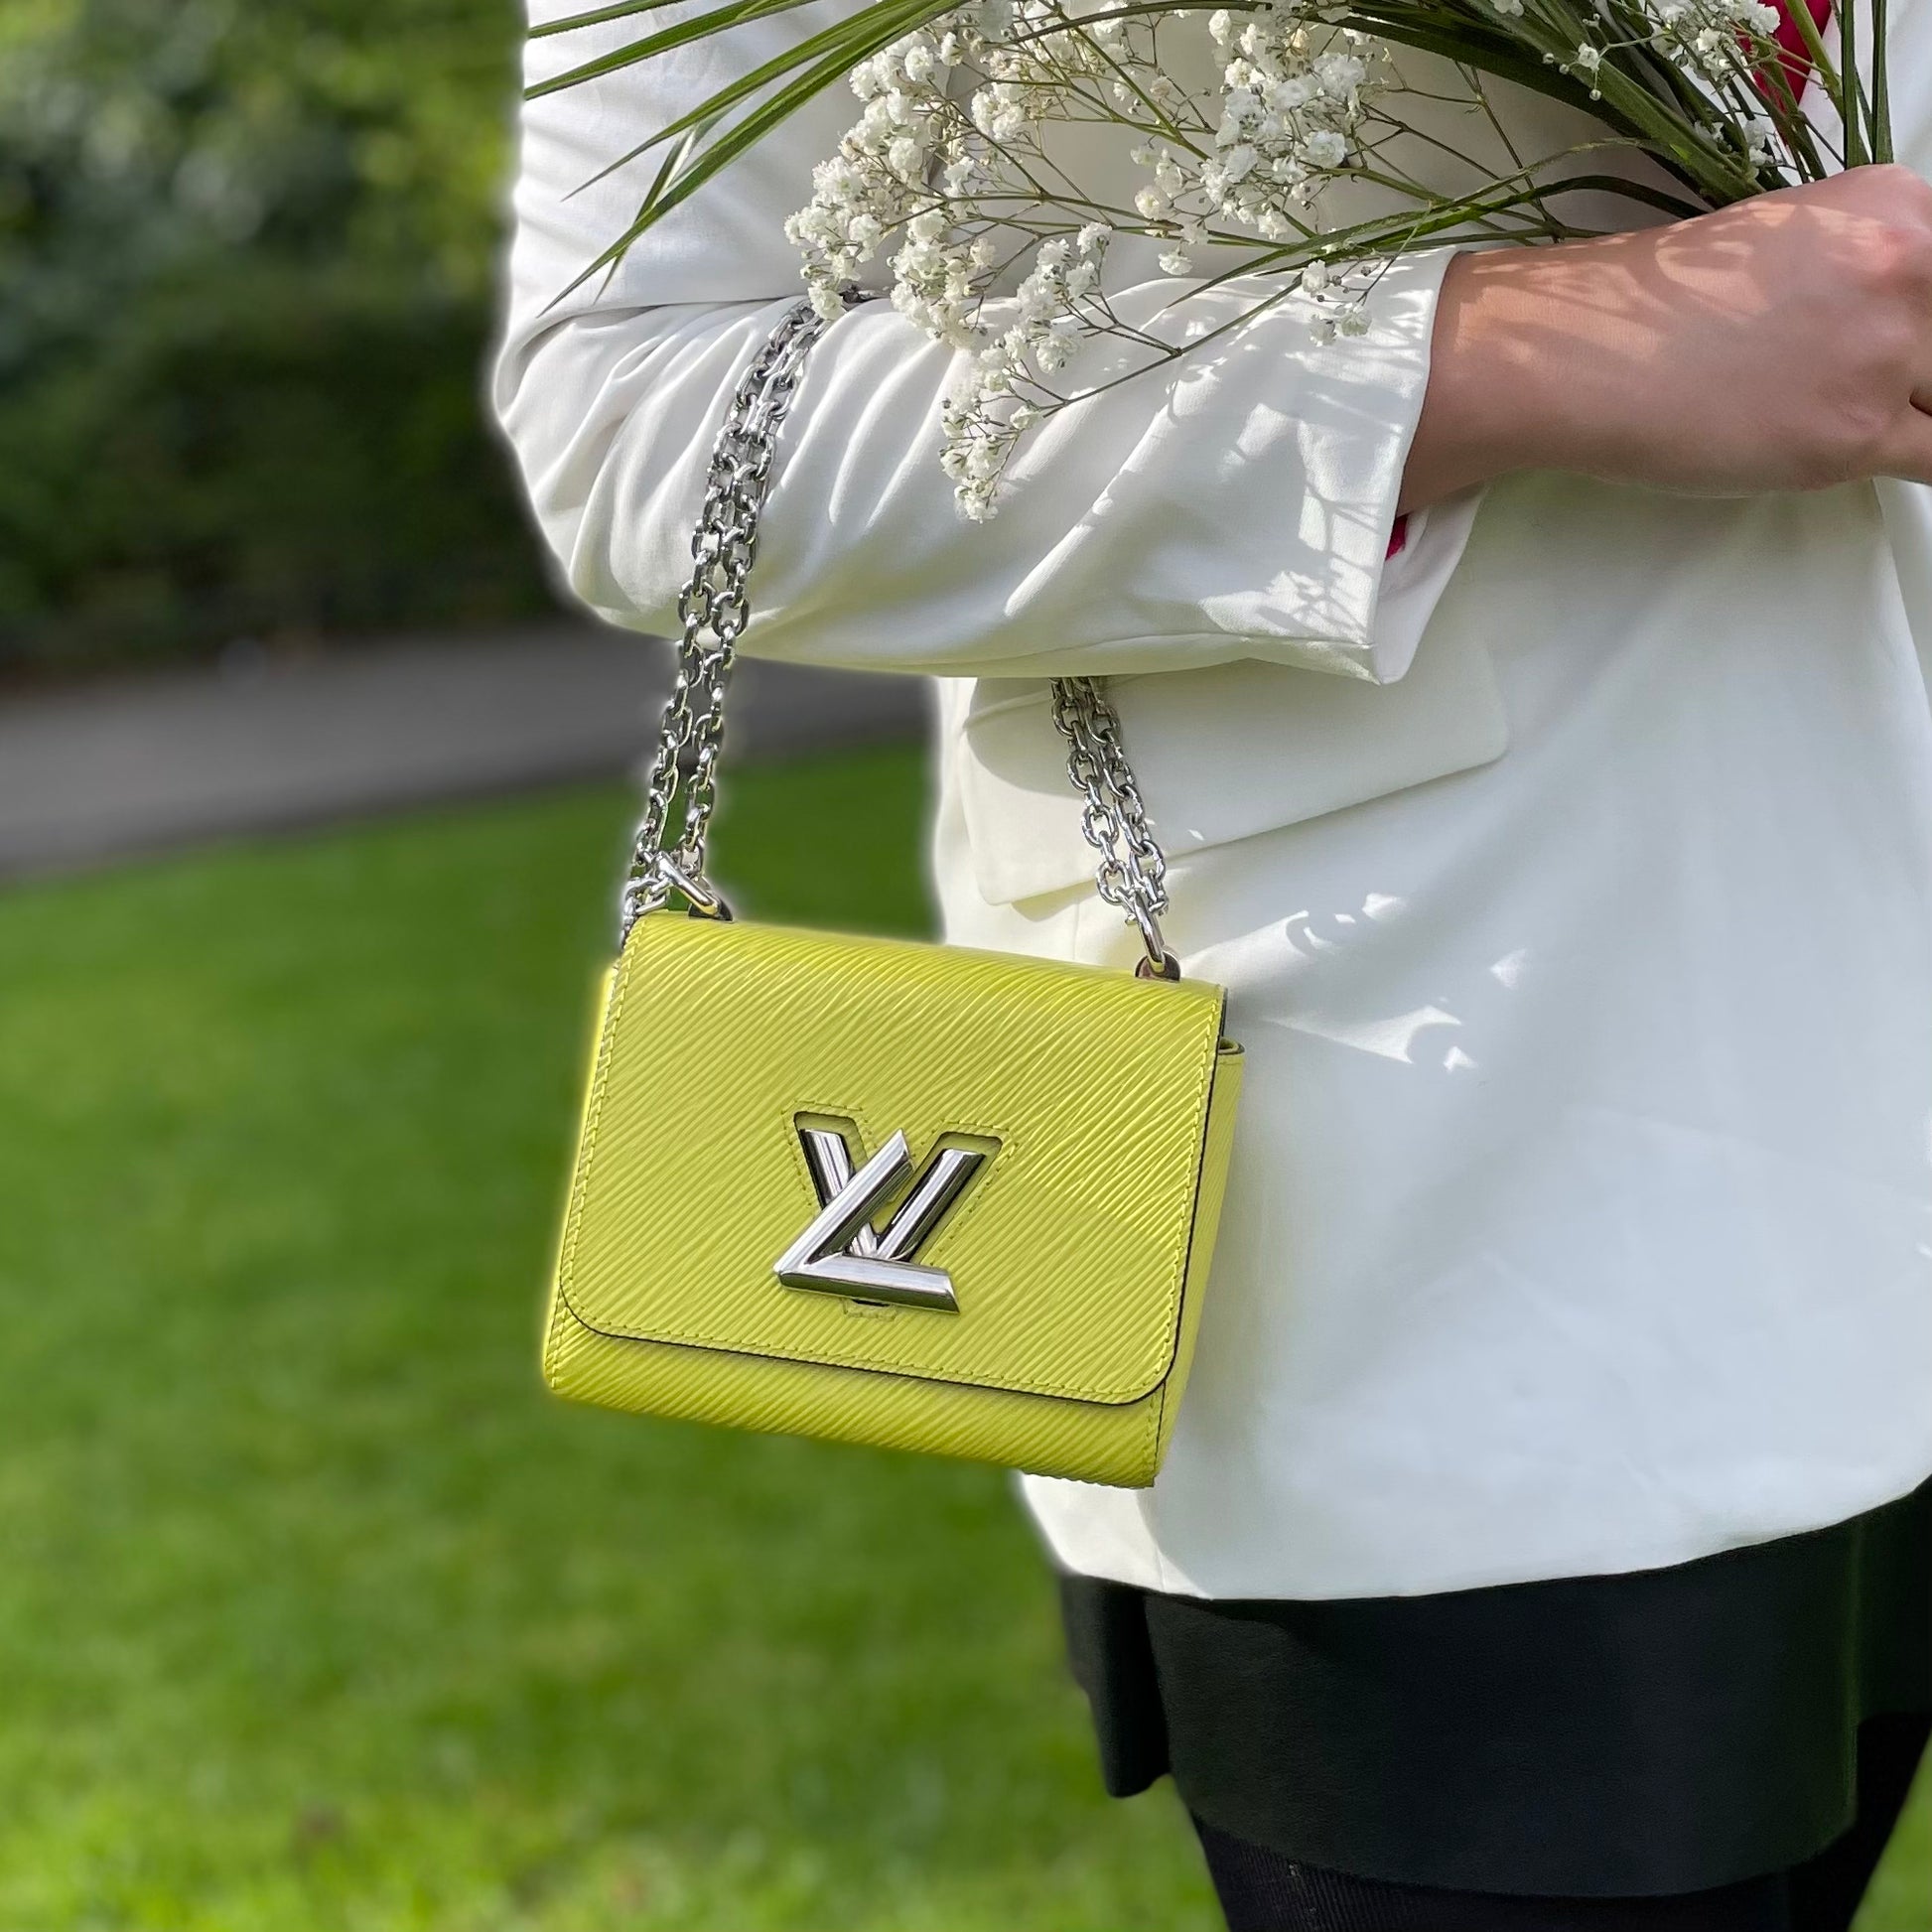 Louis Vuitton Authenticated Twist Leather Handbag